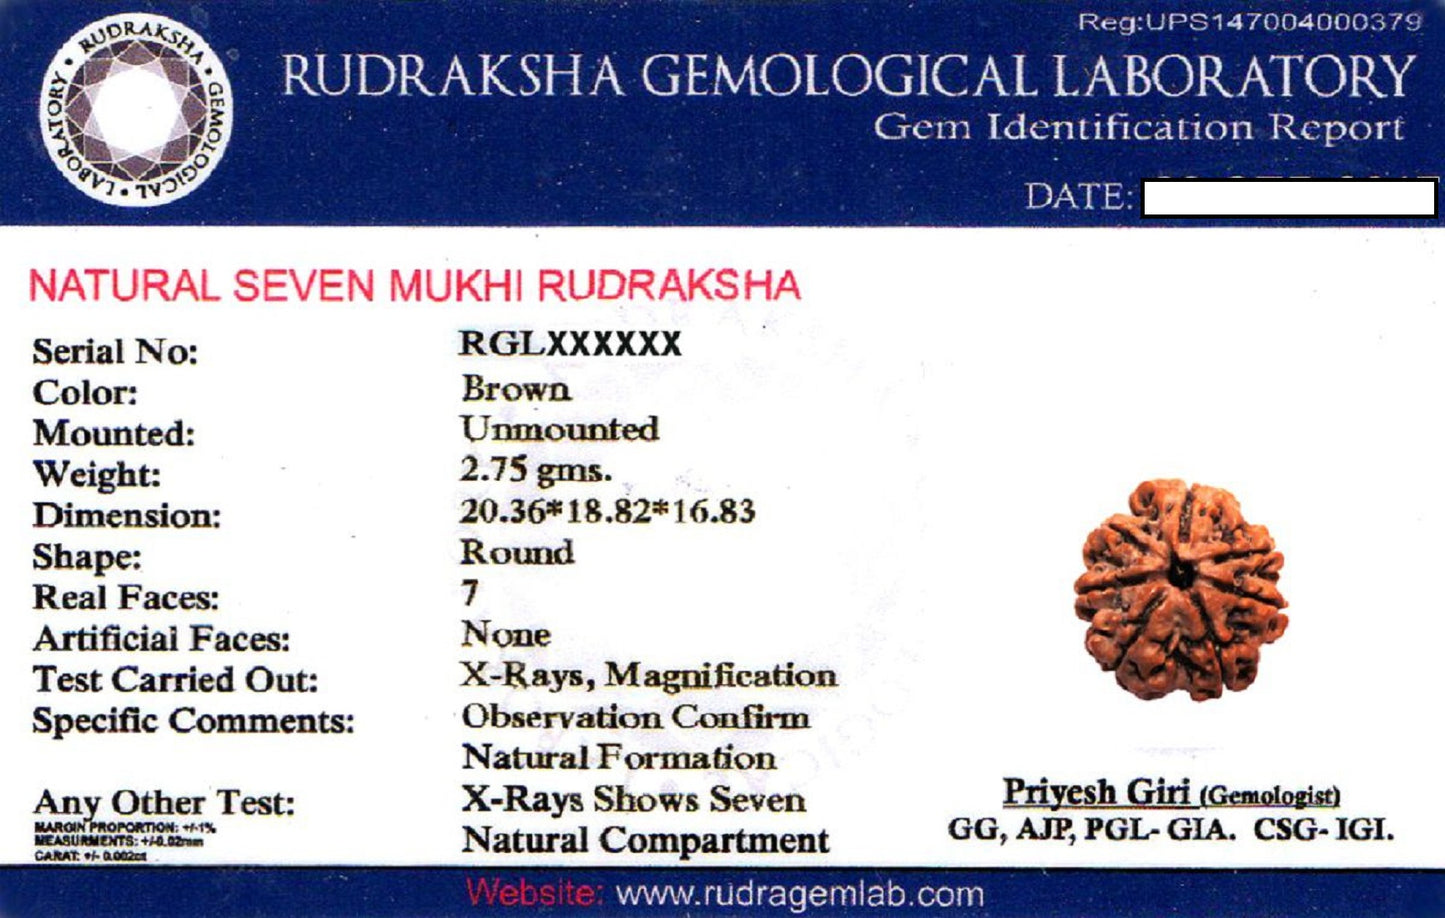 ShivaRatna 7 Mukhi Nepali Rudraksha Guru Mani with 108+1 Beads of 5 Mukhi Rudraksha Mala (Pure Silver Cap + Lab Certified)